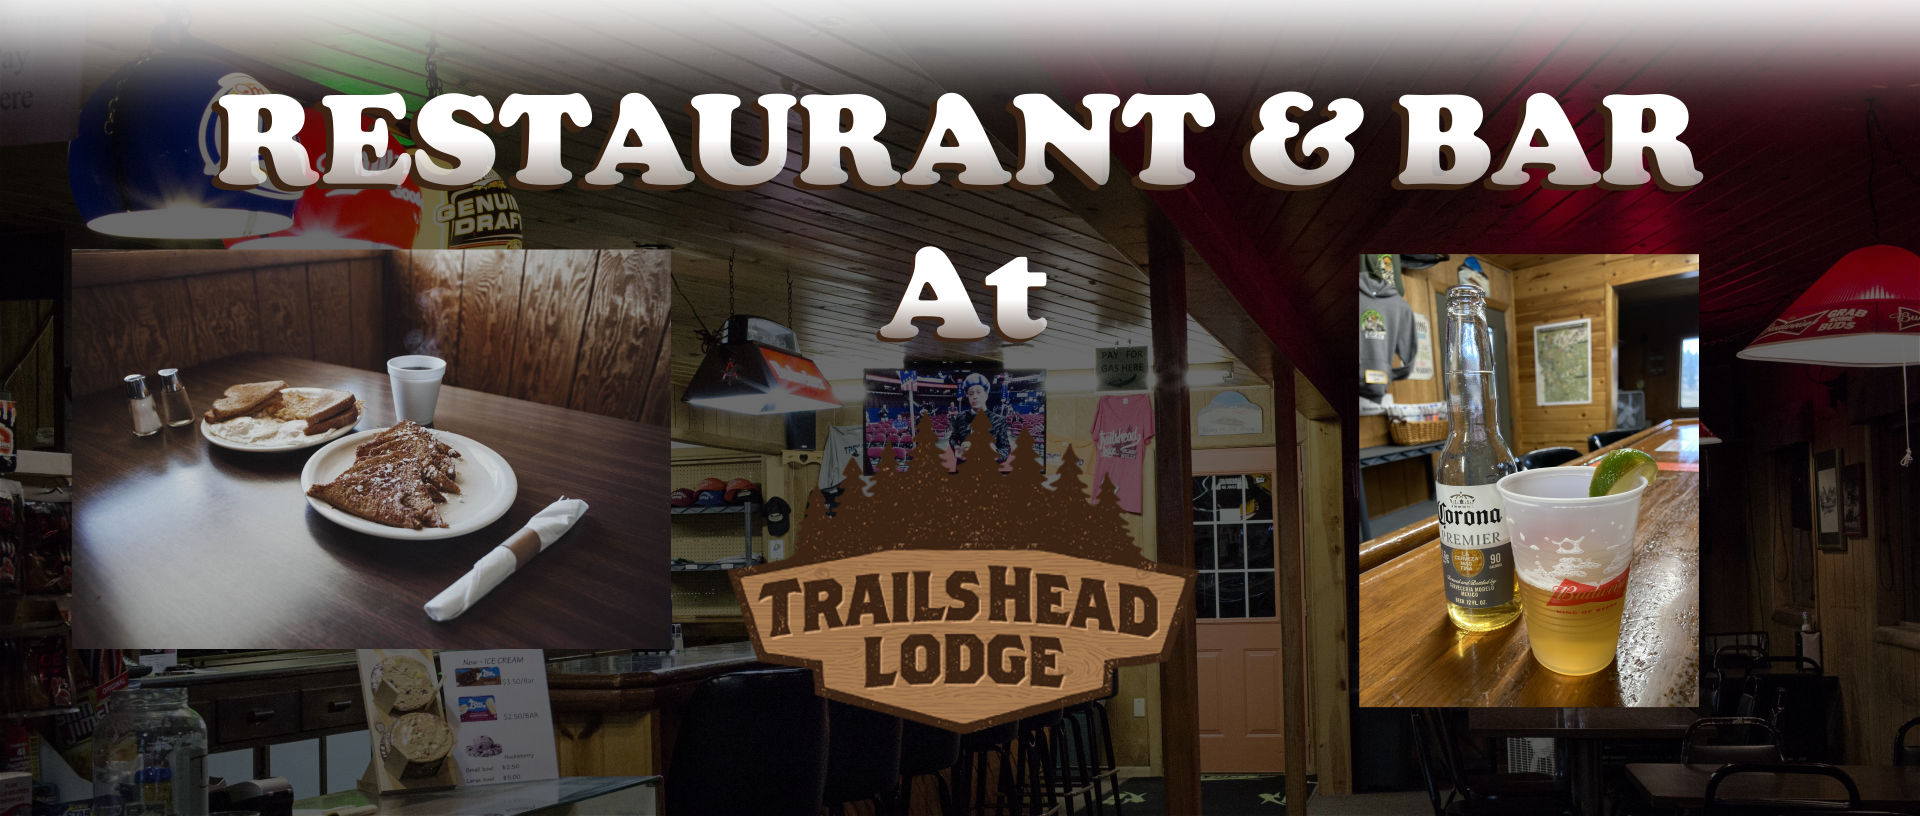 Trailshead Lodge Restaurant Bar